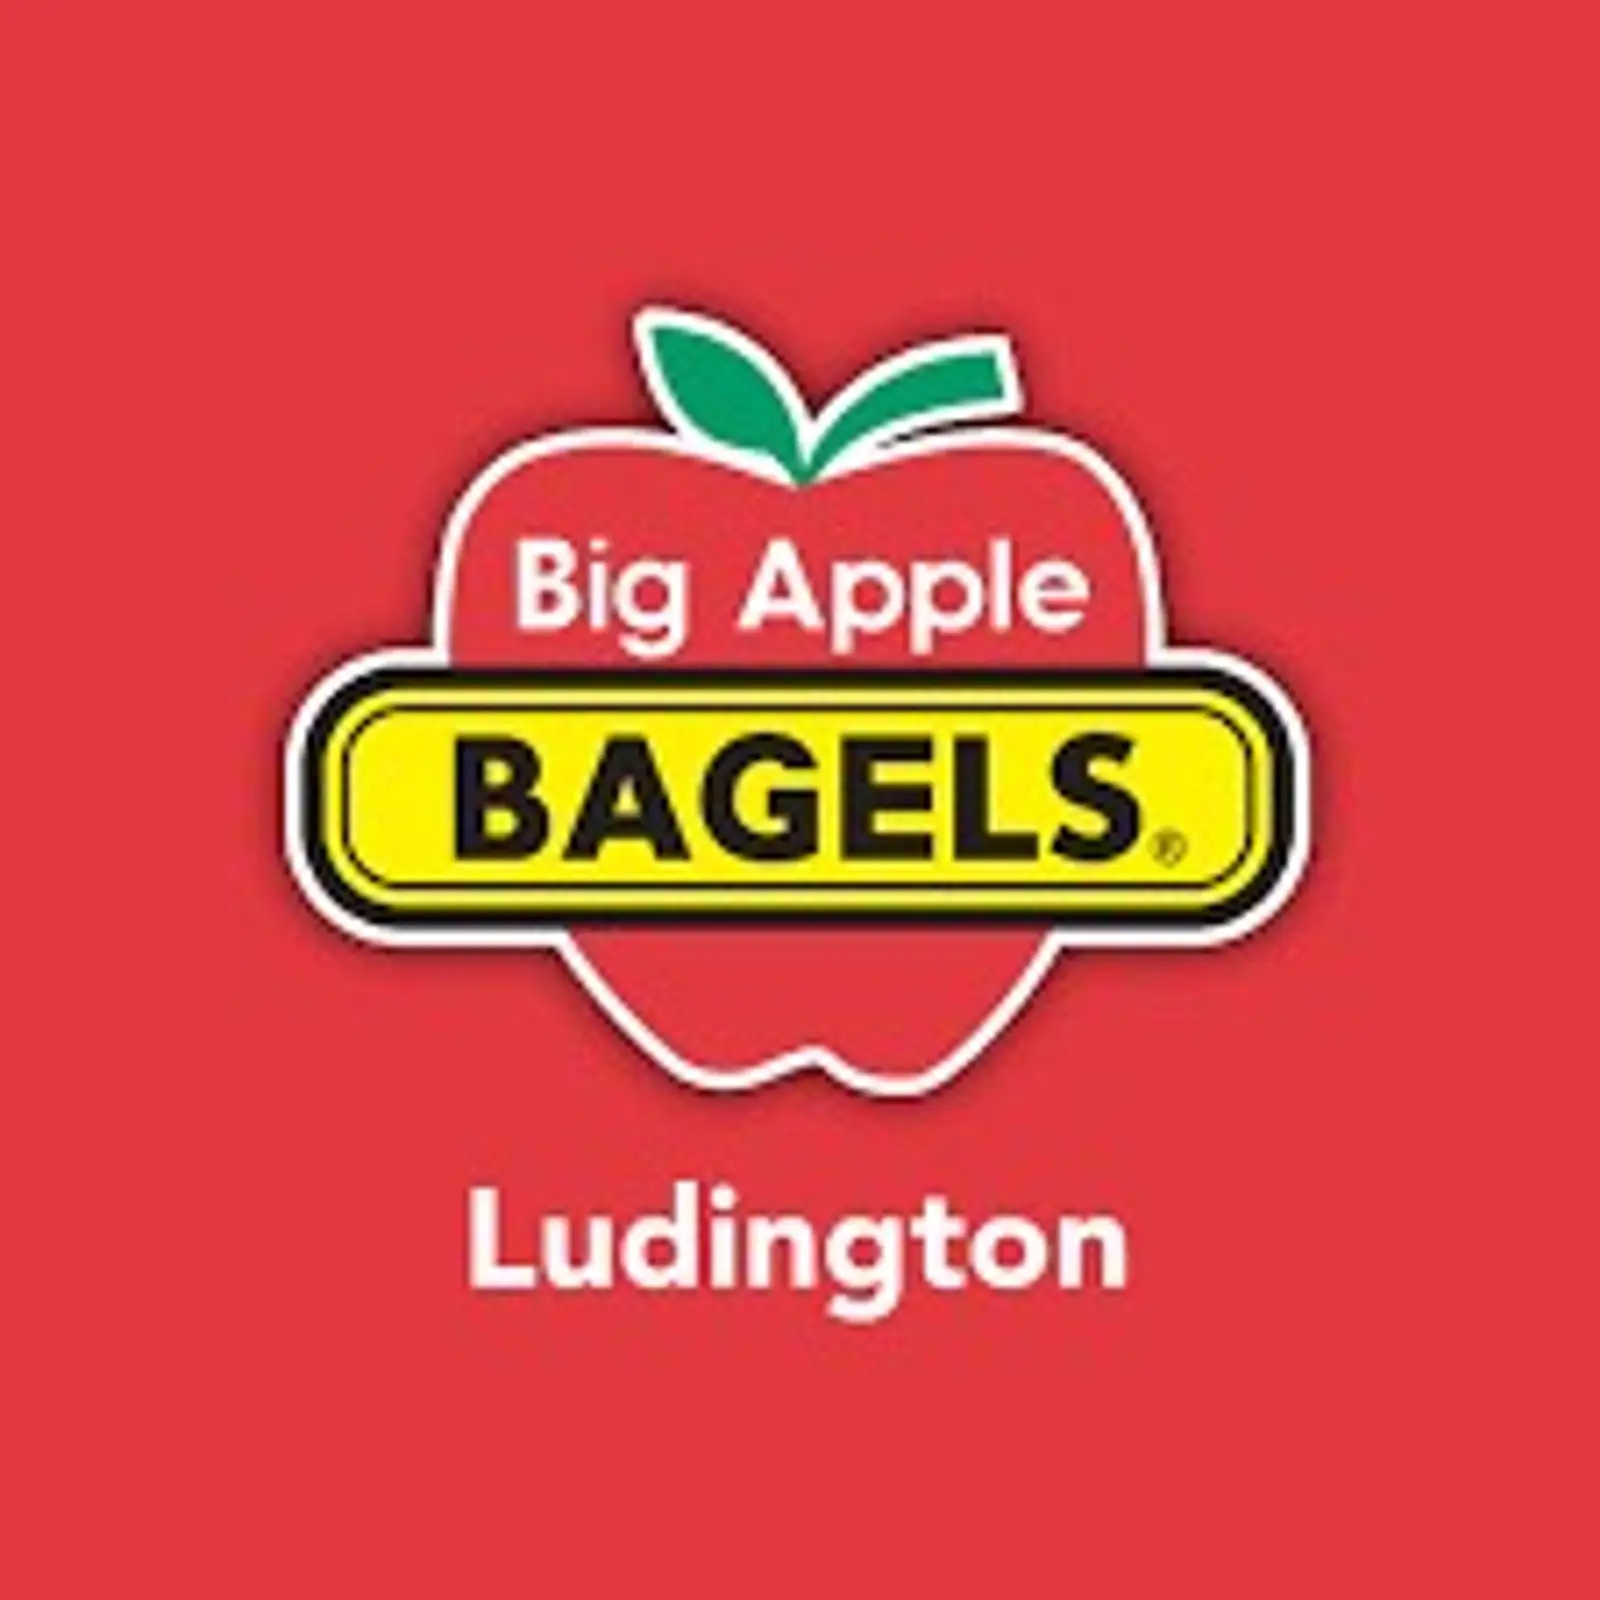 Big Apple Bagel logo